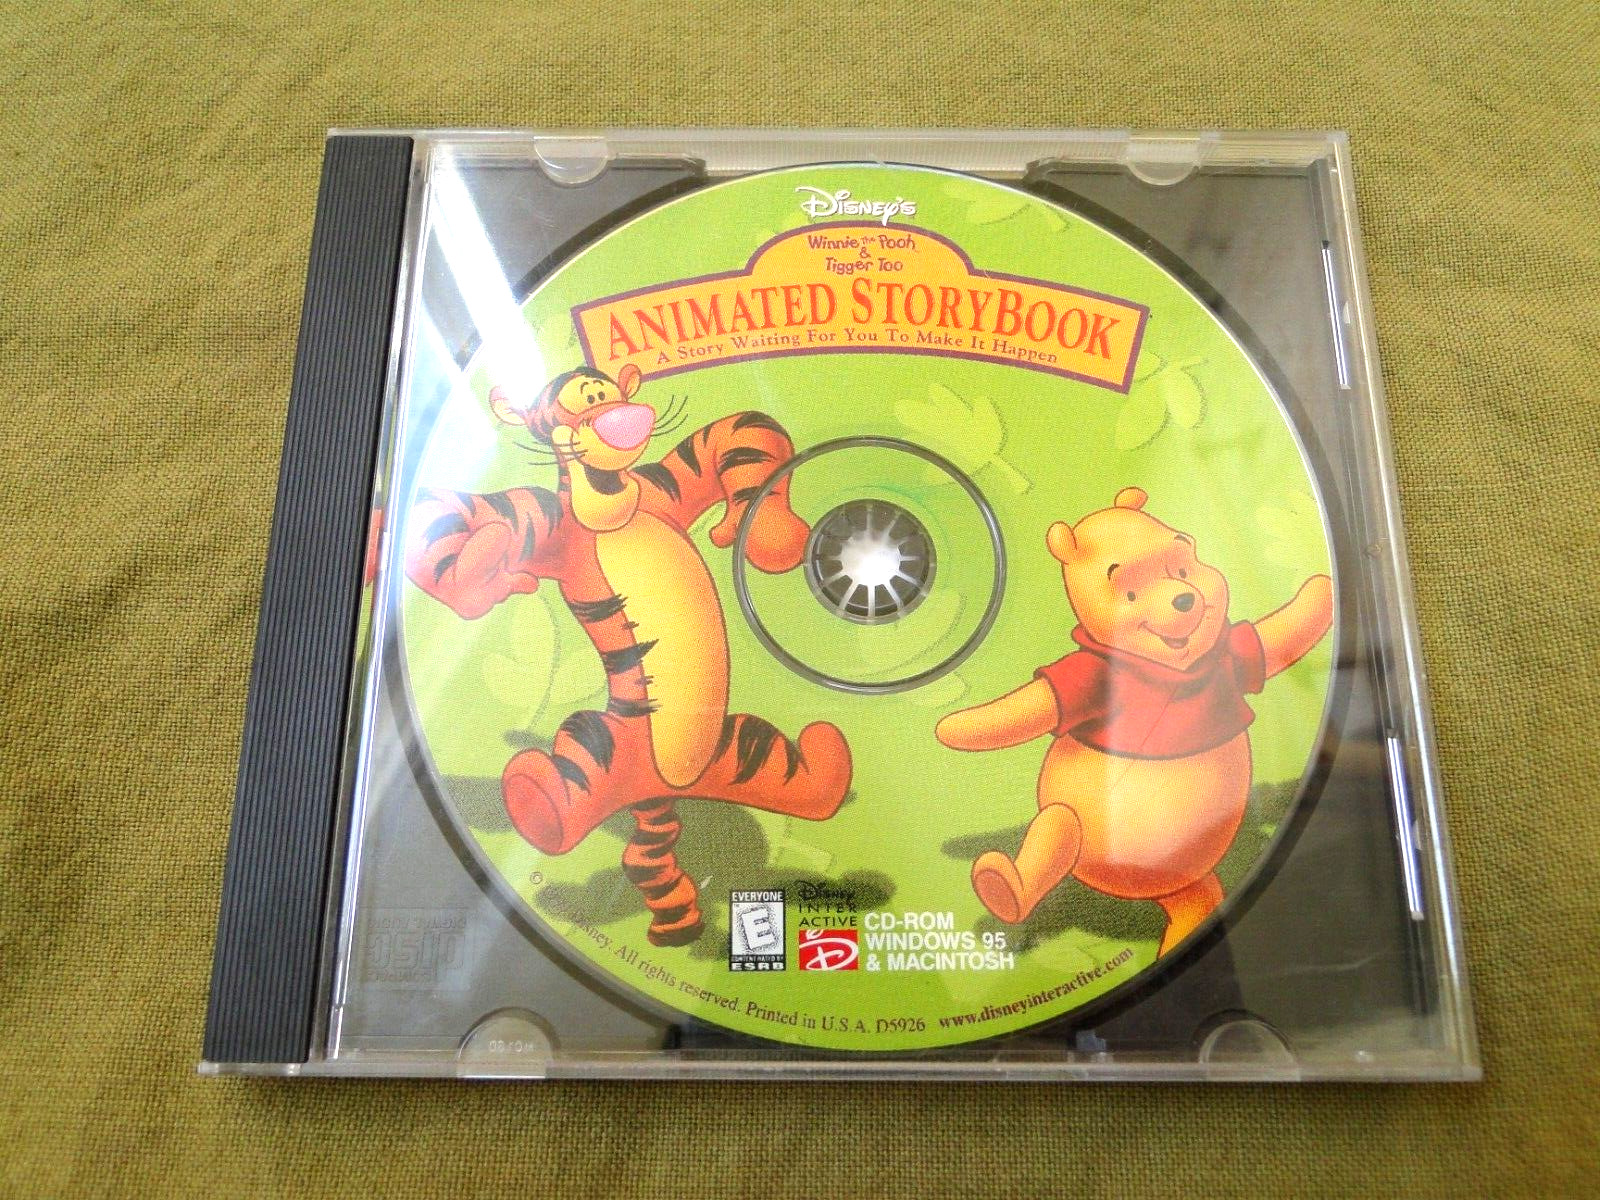 1999 Disney's Winnie The Pooh & Tigger Too: Animated Story Book Windows CD-ROM